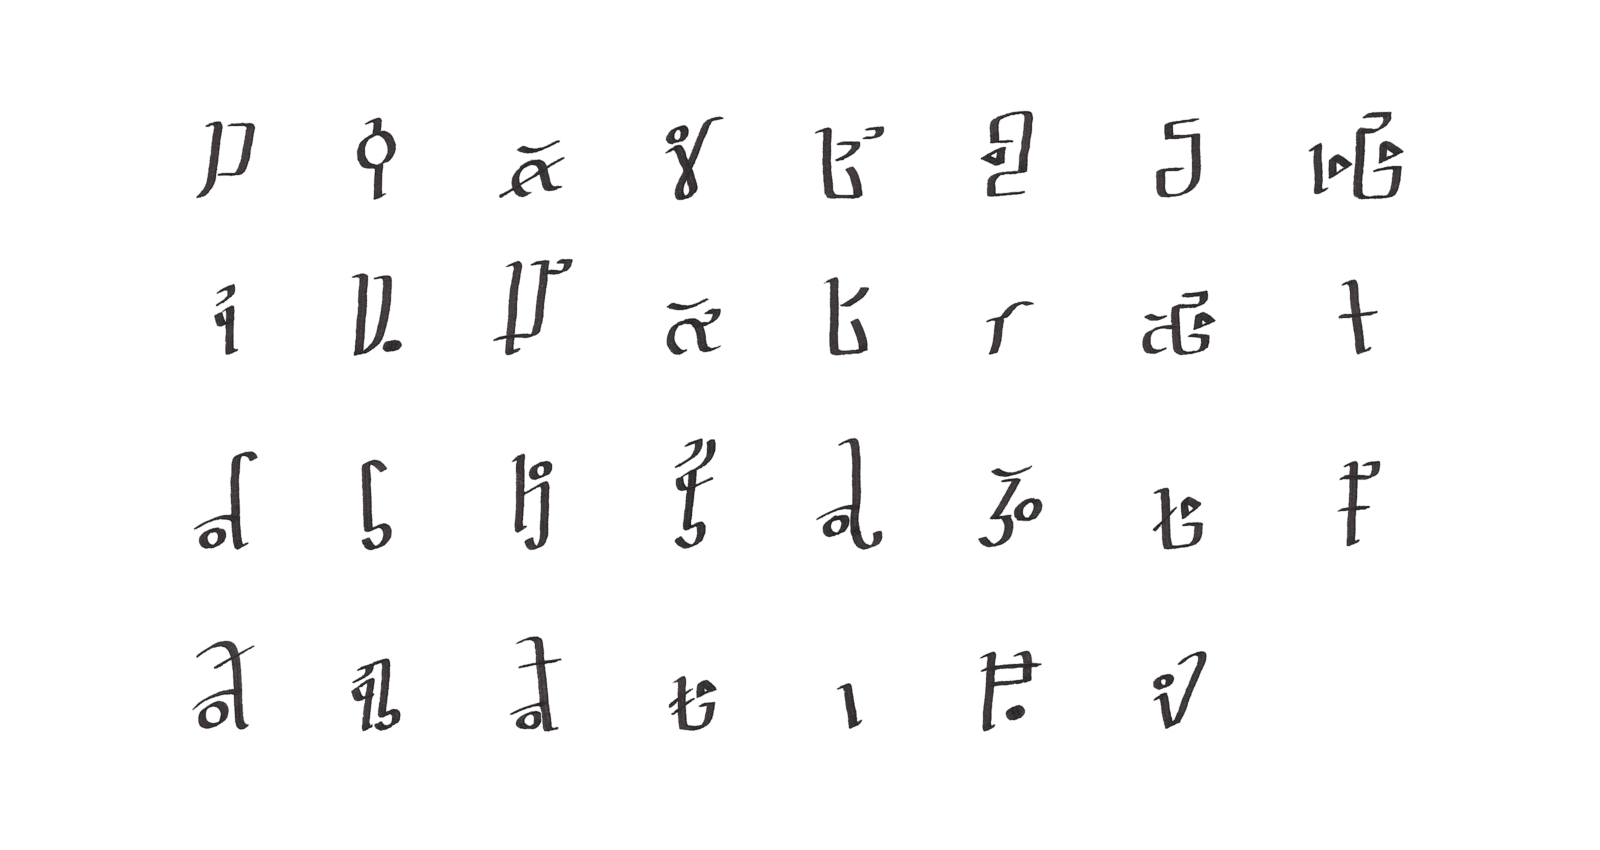 Hylian Roman extended alpabet, includes letters such as the æ, the ß, and the ı